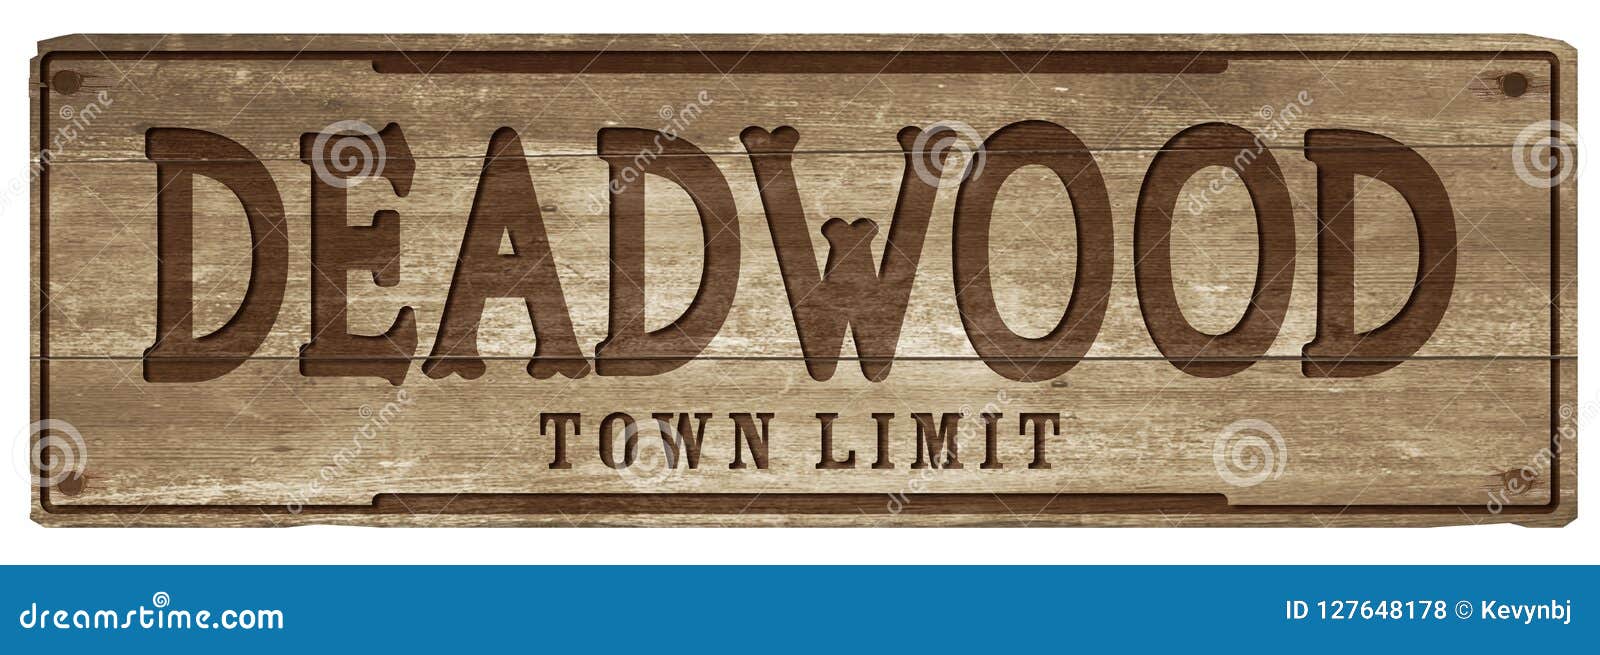 deadwood south dakota town limit sign